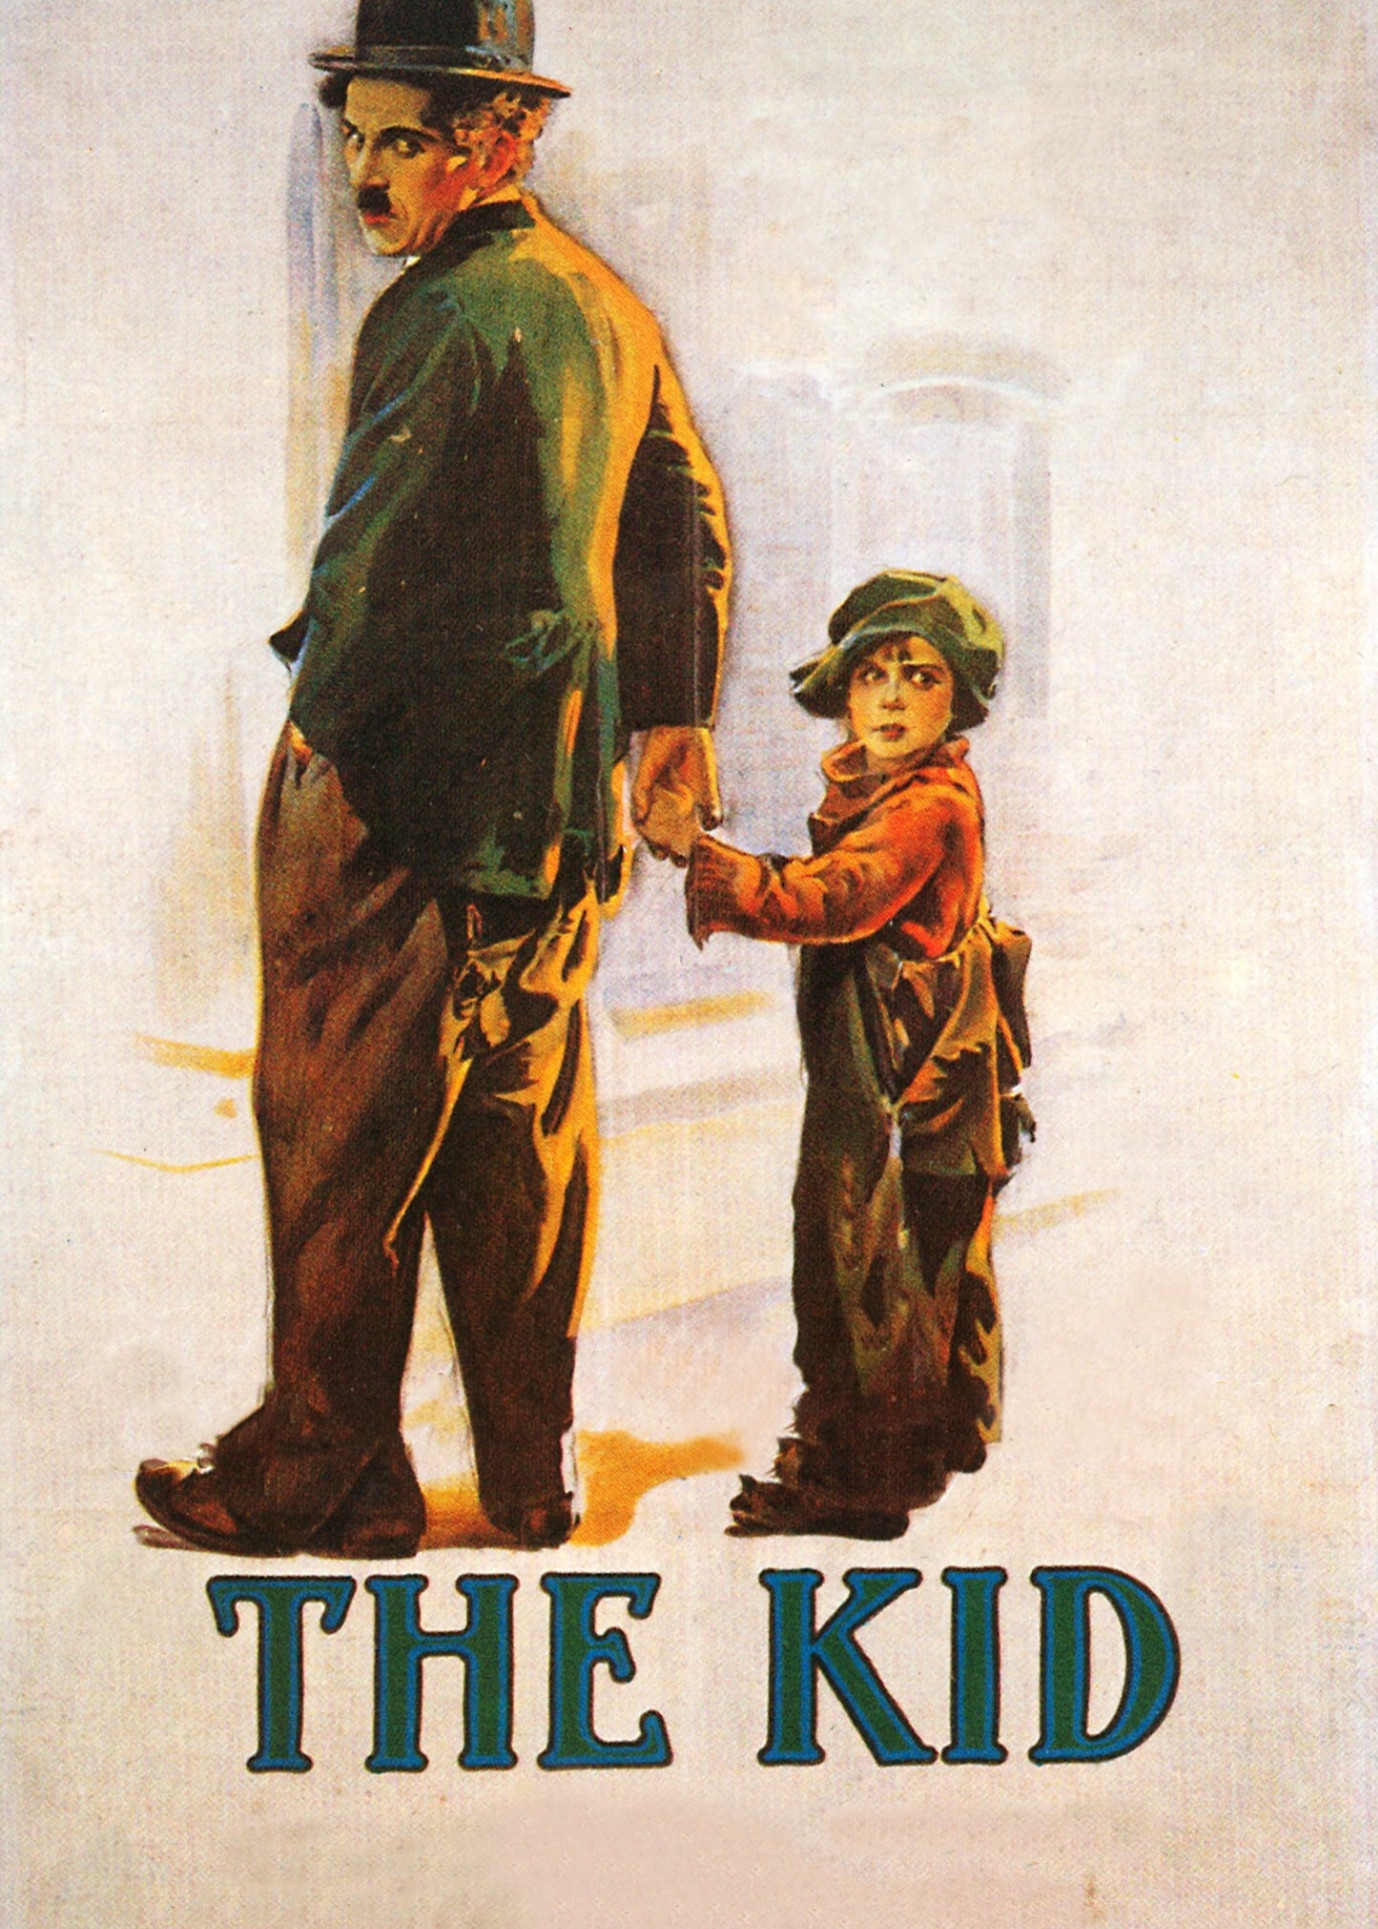 The Kid (The Kid) [1921]